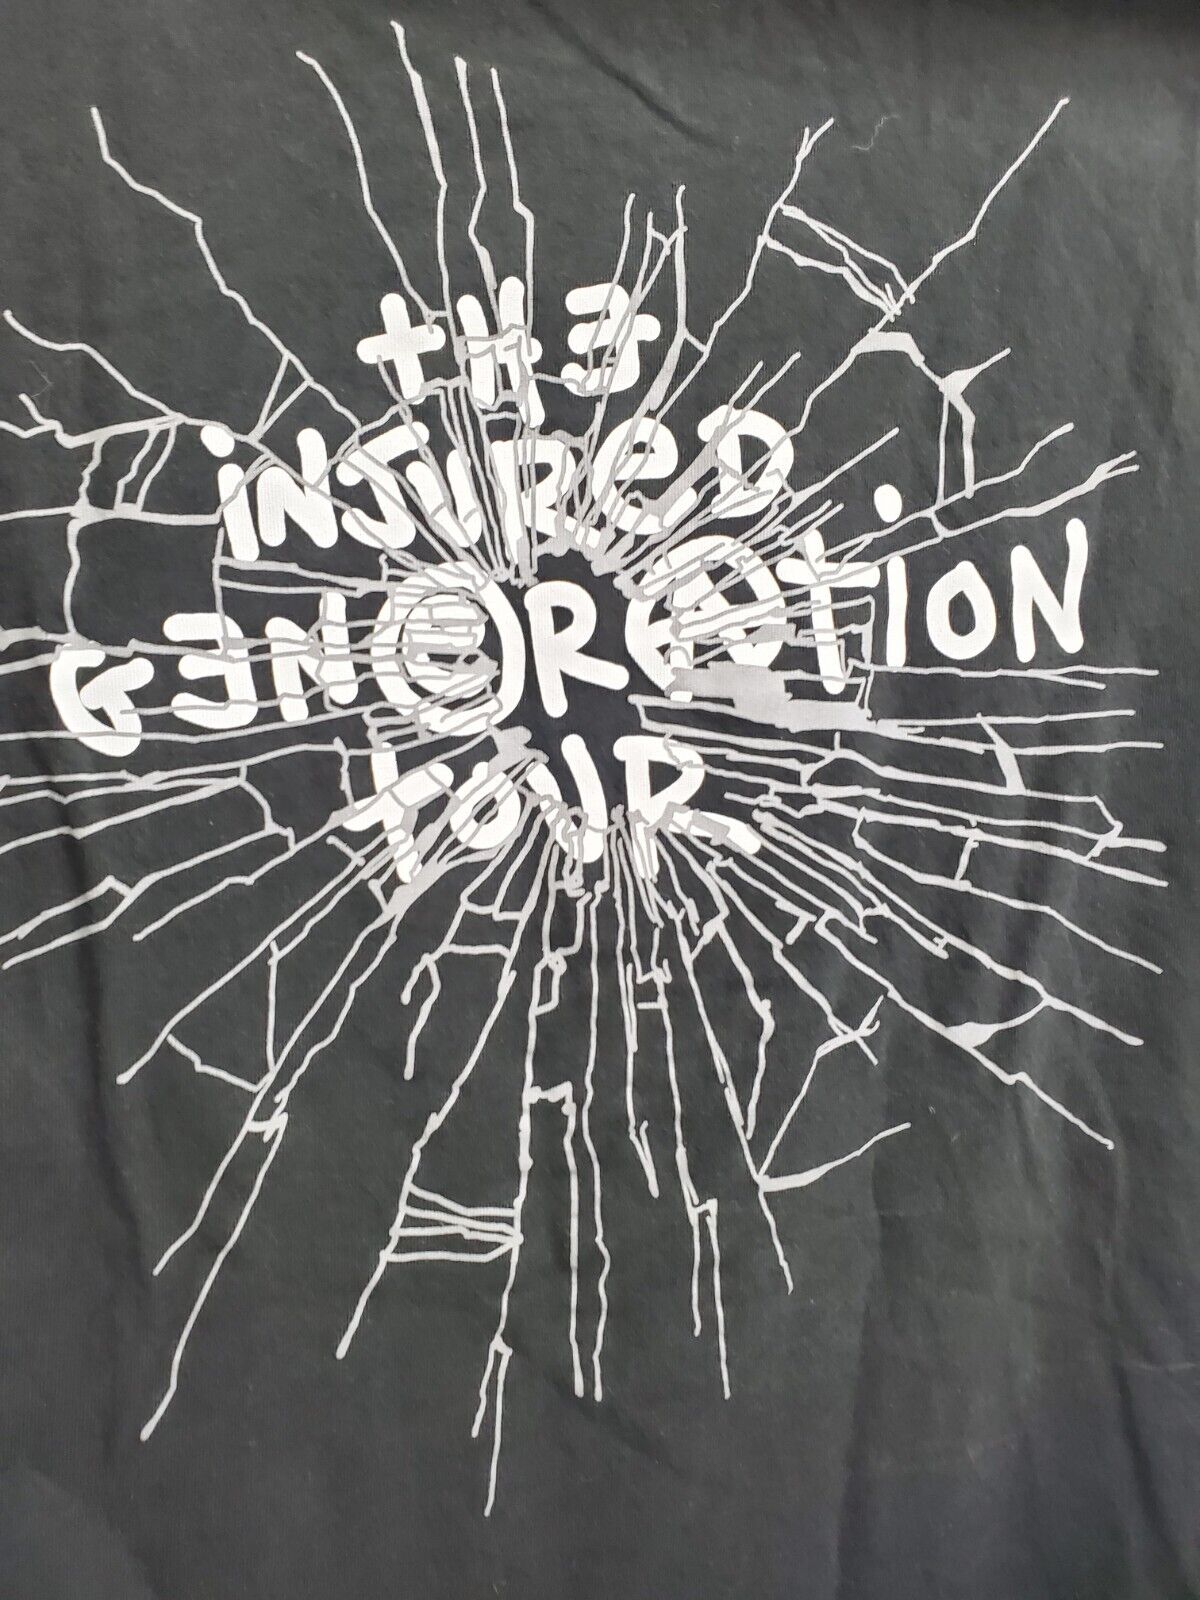 ASAP Rocky Injured Generation Tour T Shirt Size Small Black Short Sleeve 2019